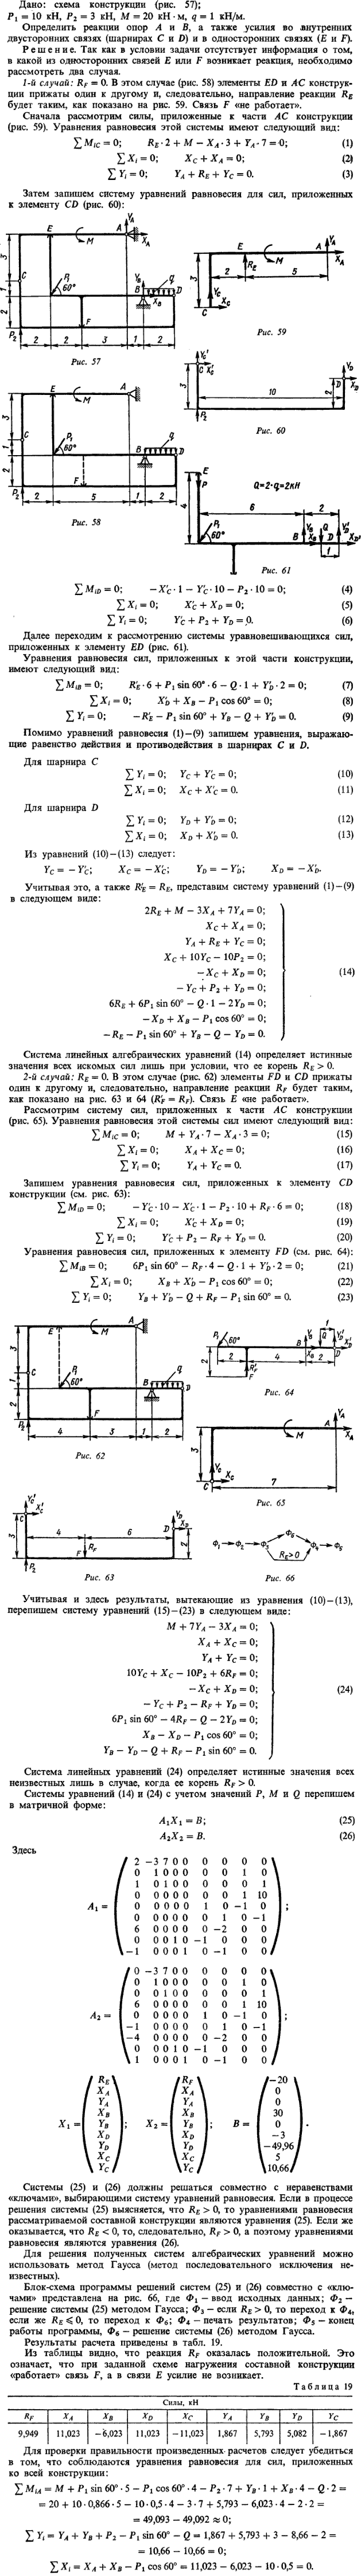 C9 пример 1. Дано: схема конструкции рис. 57); P1=10 кН, P2=3 кН, M=20 кН*м, q=1 кН/м. Определить реакции опор A и B, а также усилия во внутренних